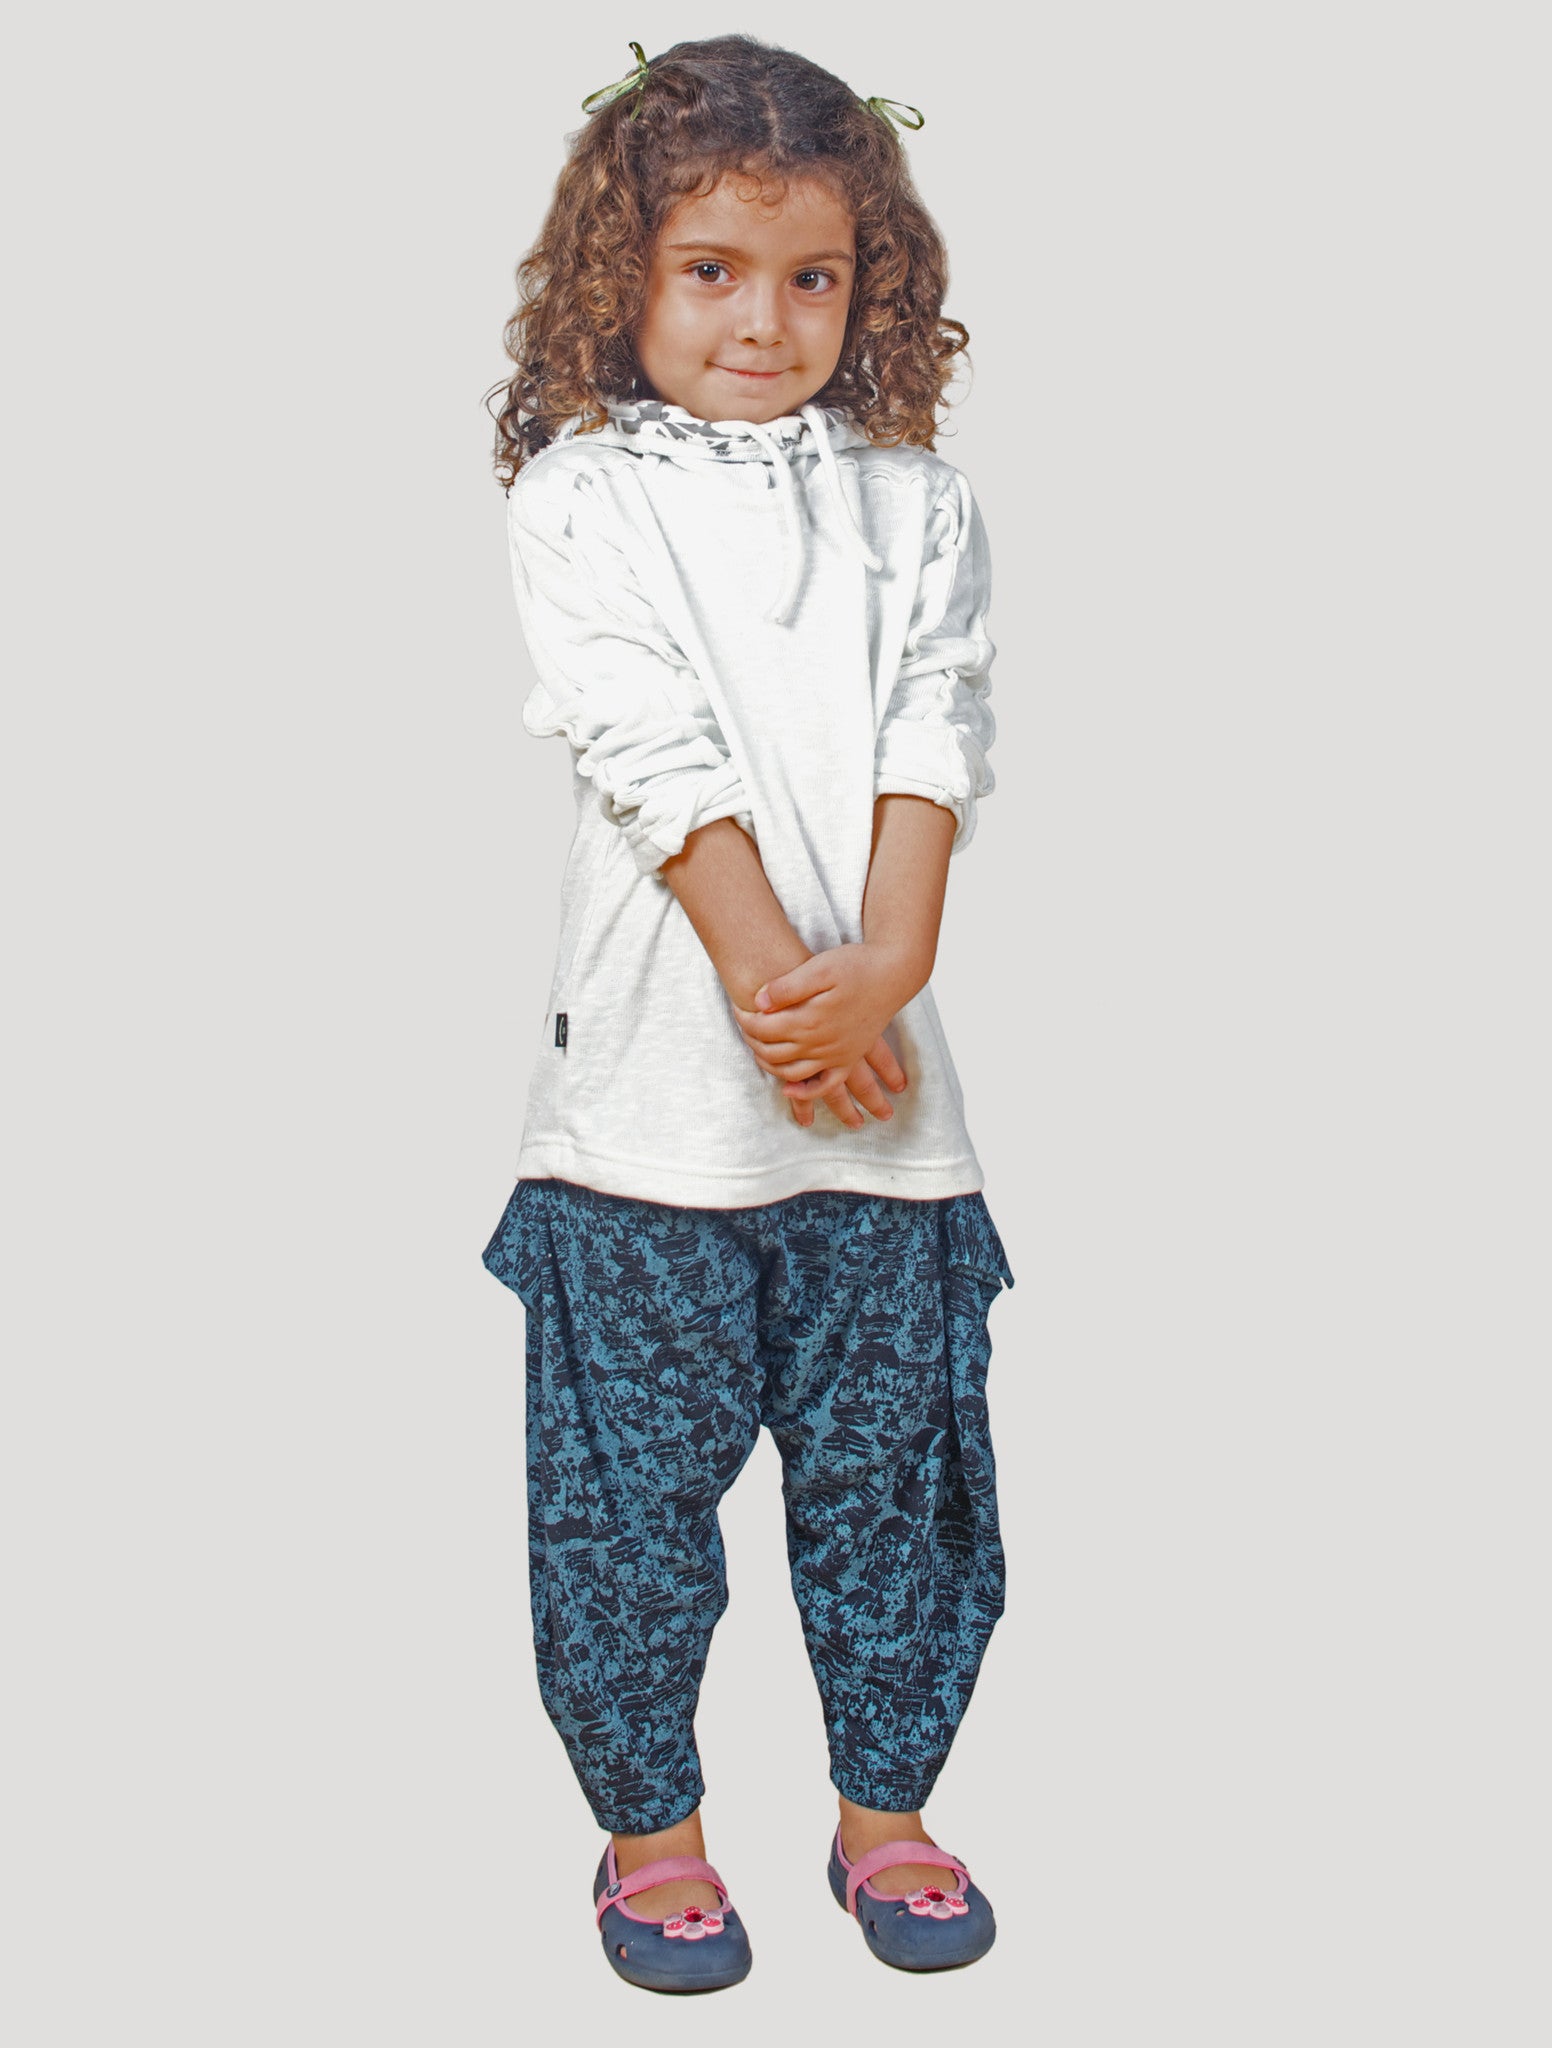 Georgette Pink Kids Salwar Suit at Rs 1450/piece in New Delhi | ID:  2852118848388